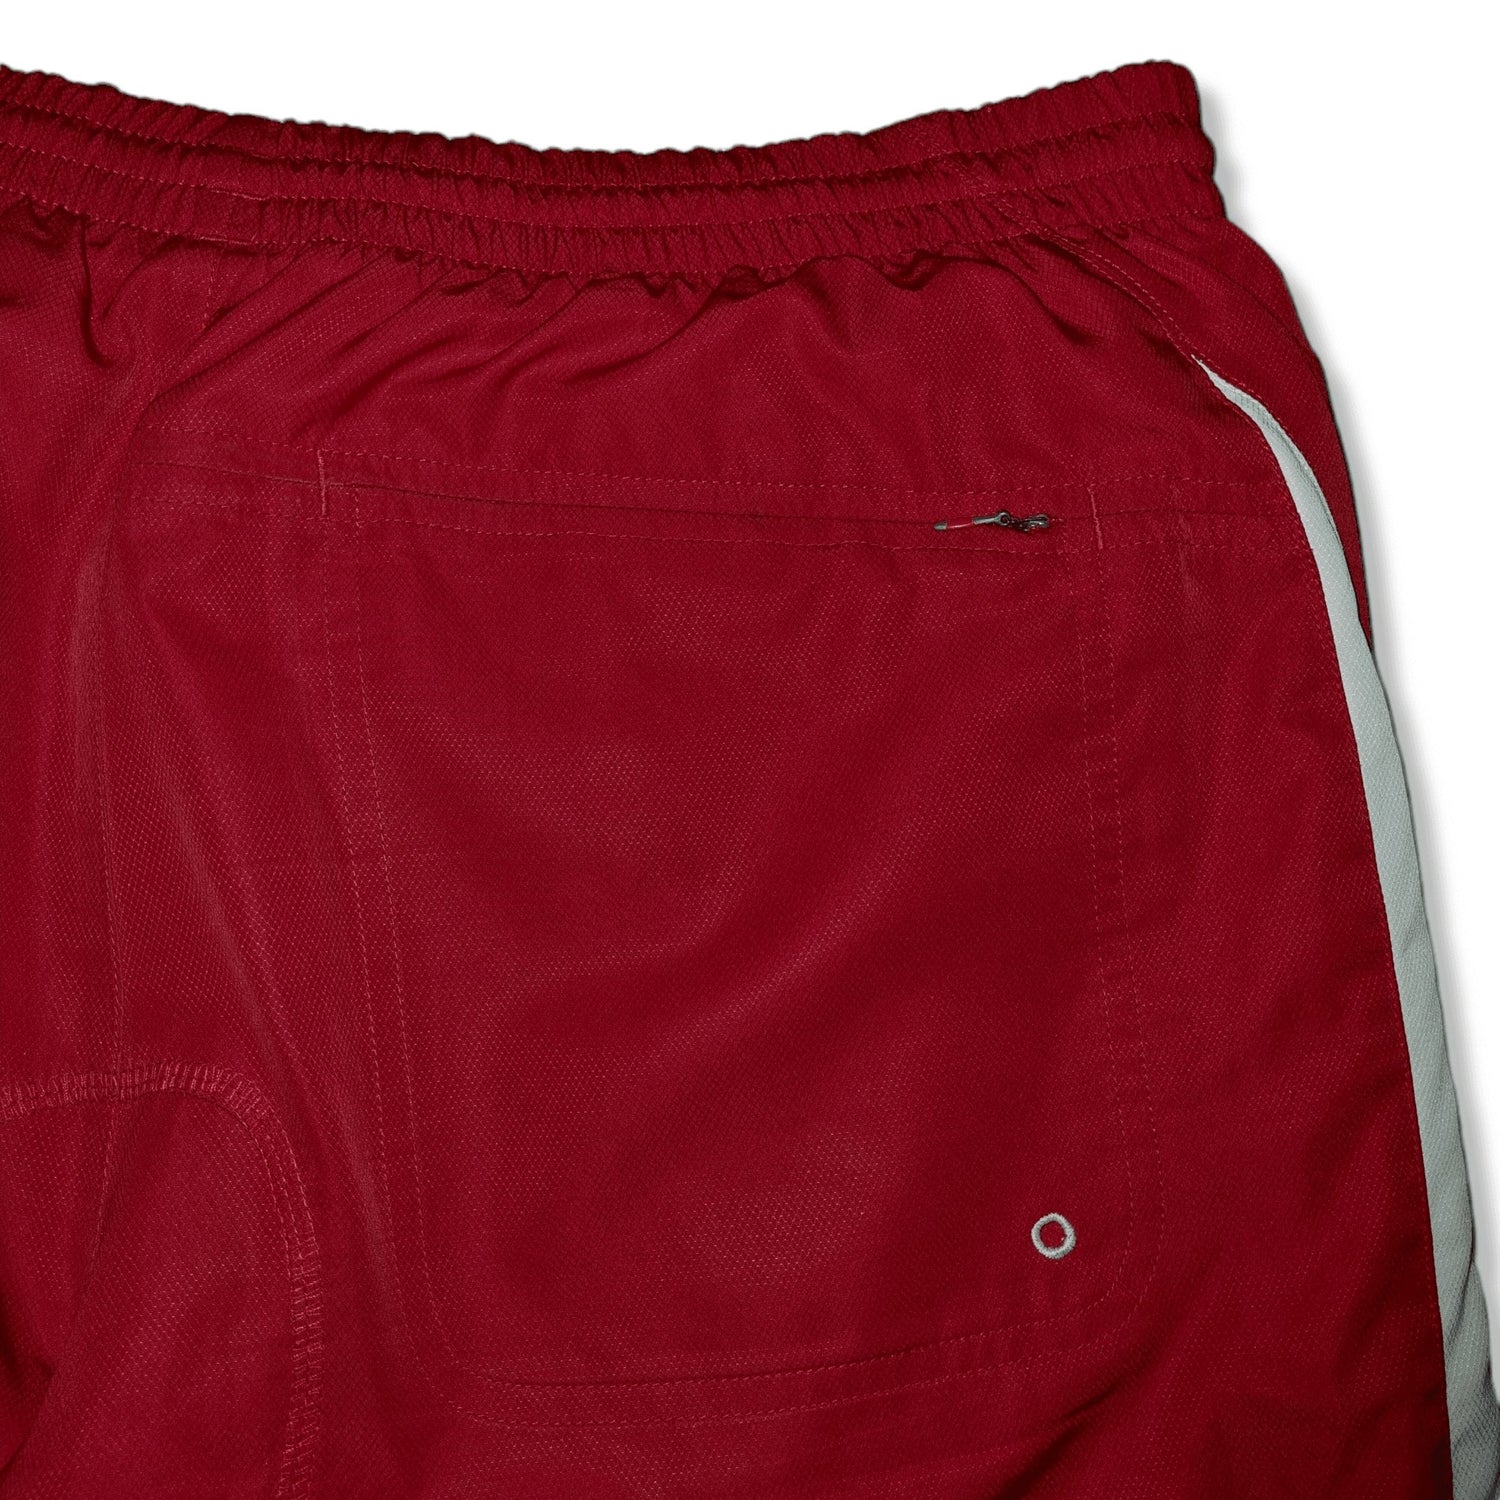 Pantaloncini Umbro (L/XL) - oldstyleclothing